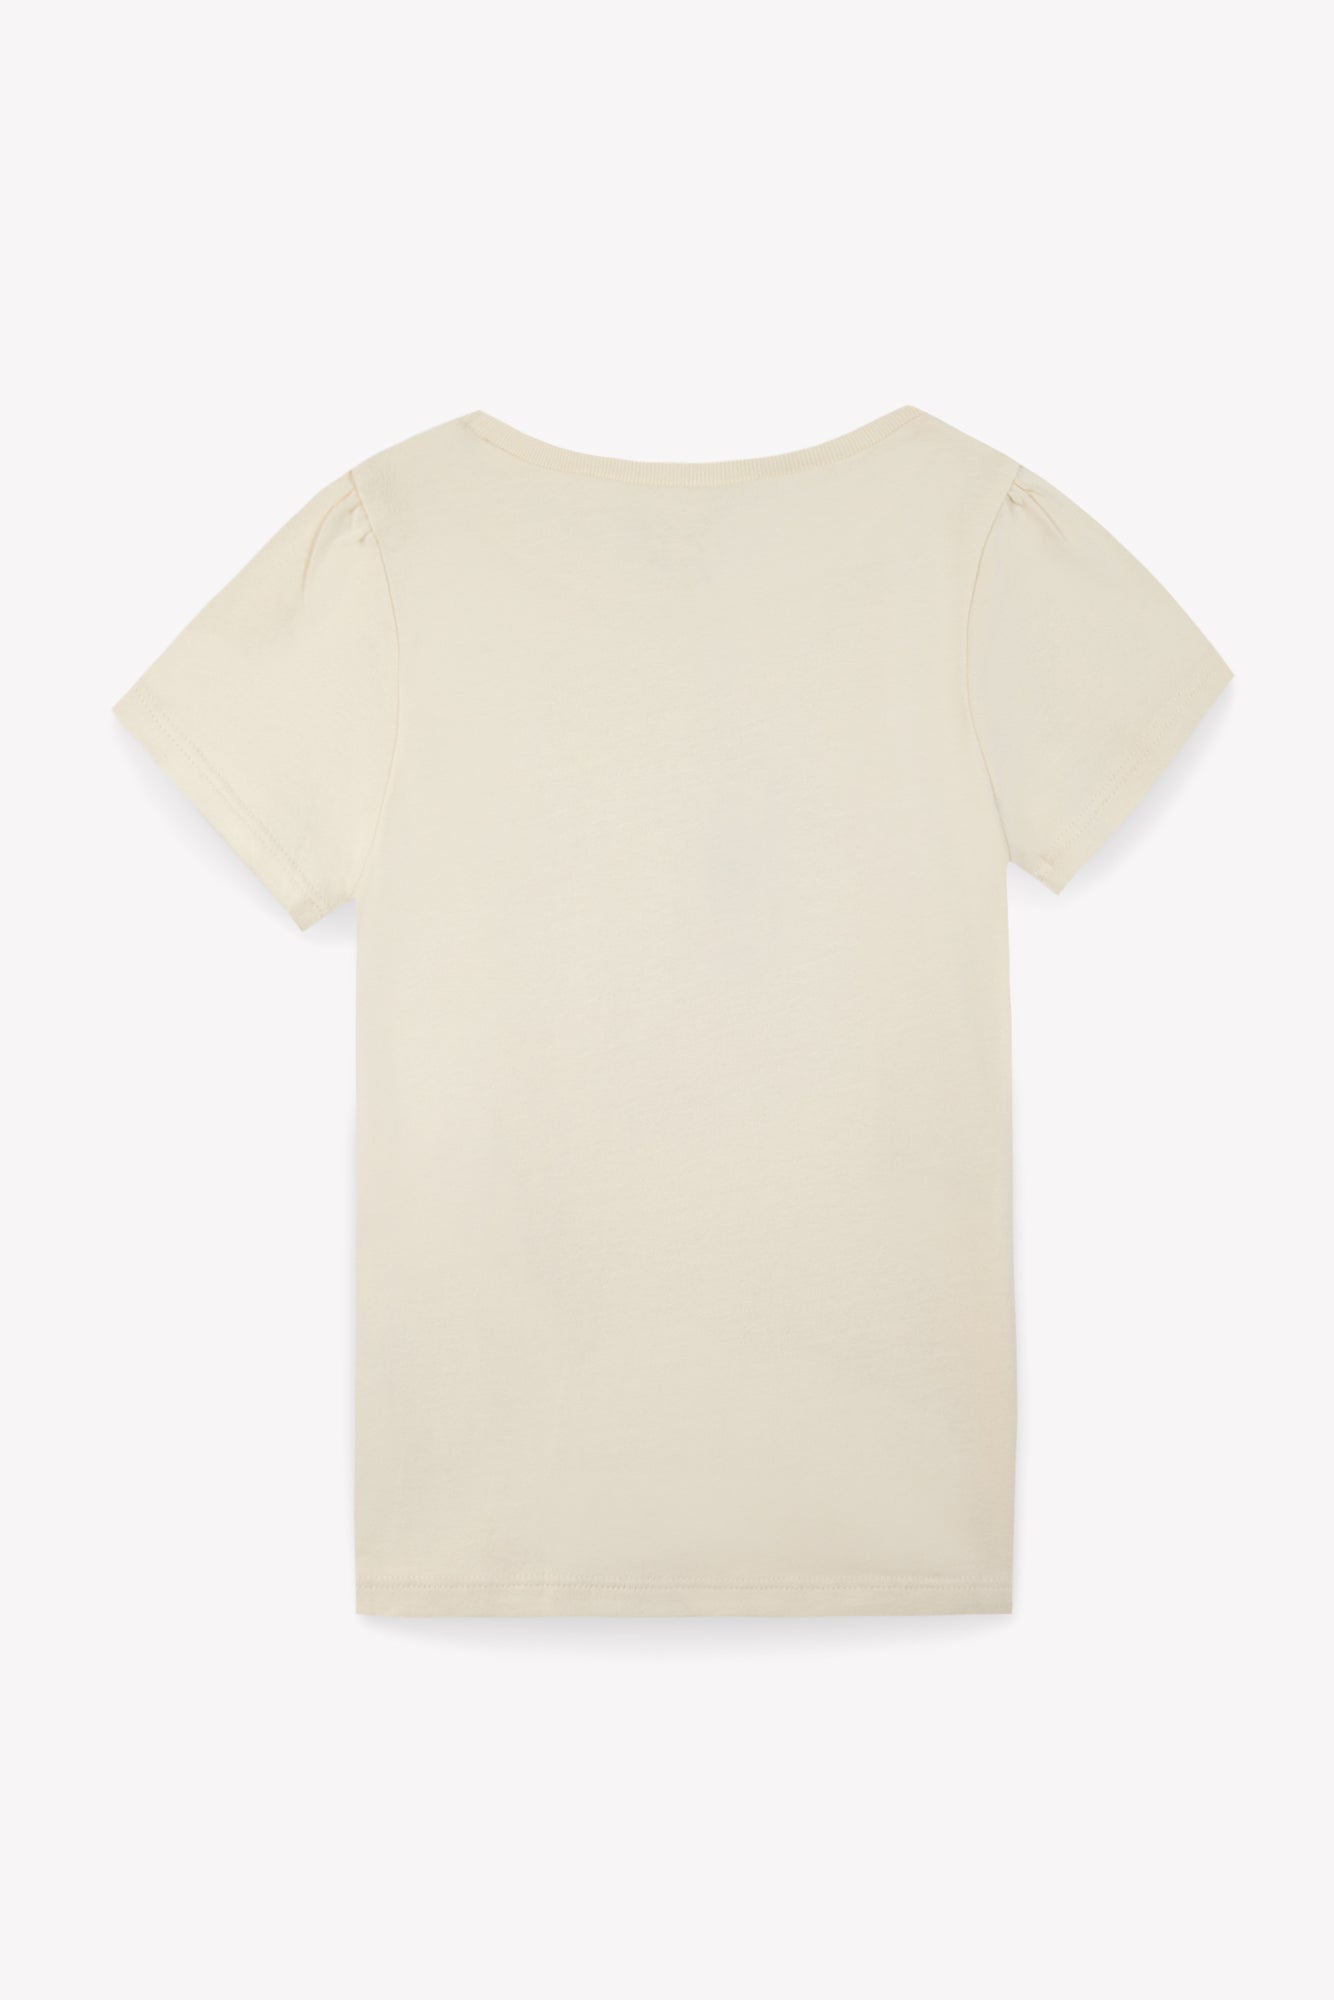 Tee-shirt - Thym écru coton organique